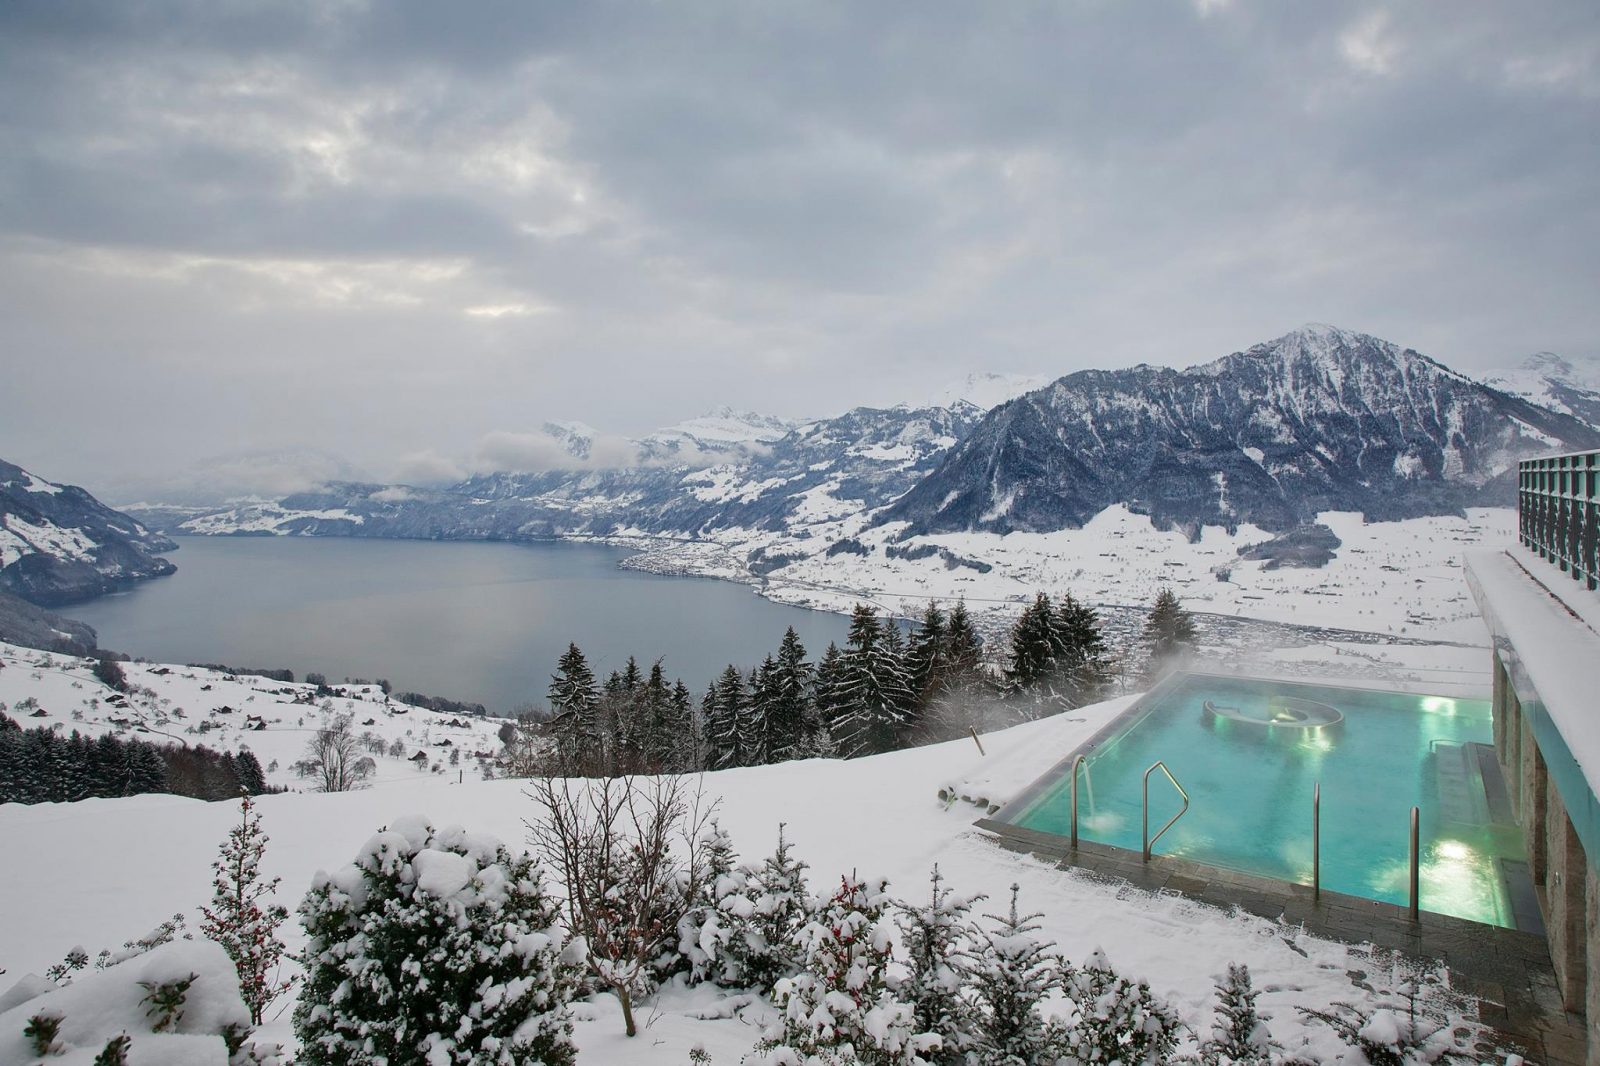 Hotel Villa Honegg cosy winter hotels in europe